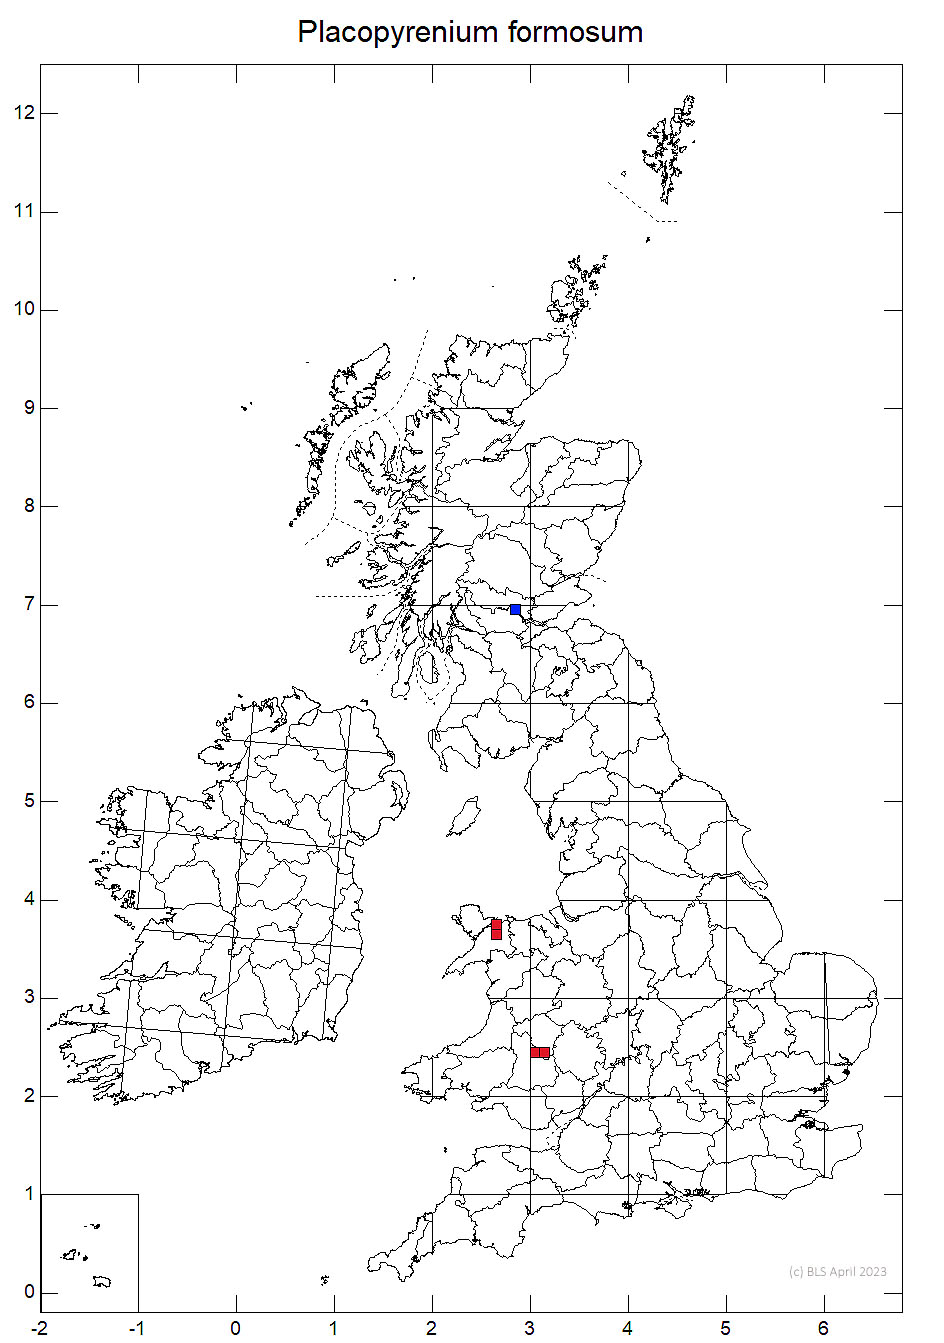 Placopyrenium formosum 10km sq distribution map